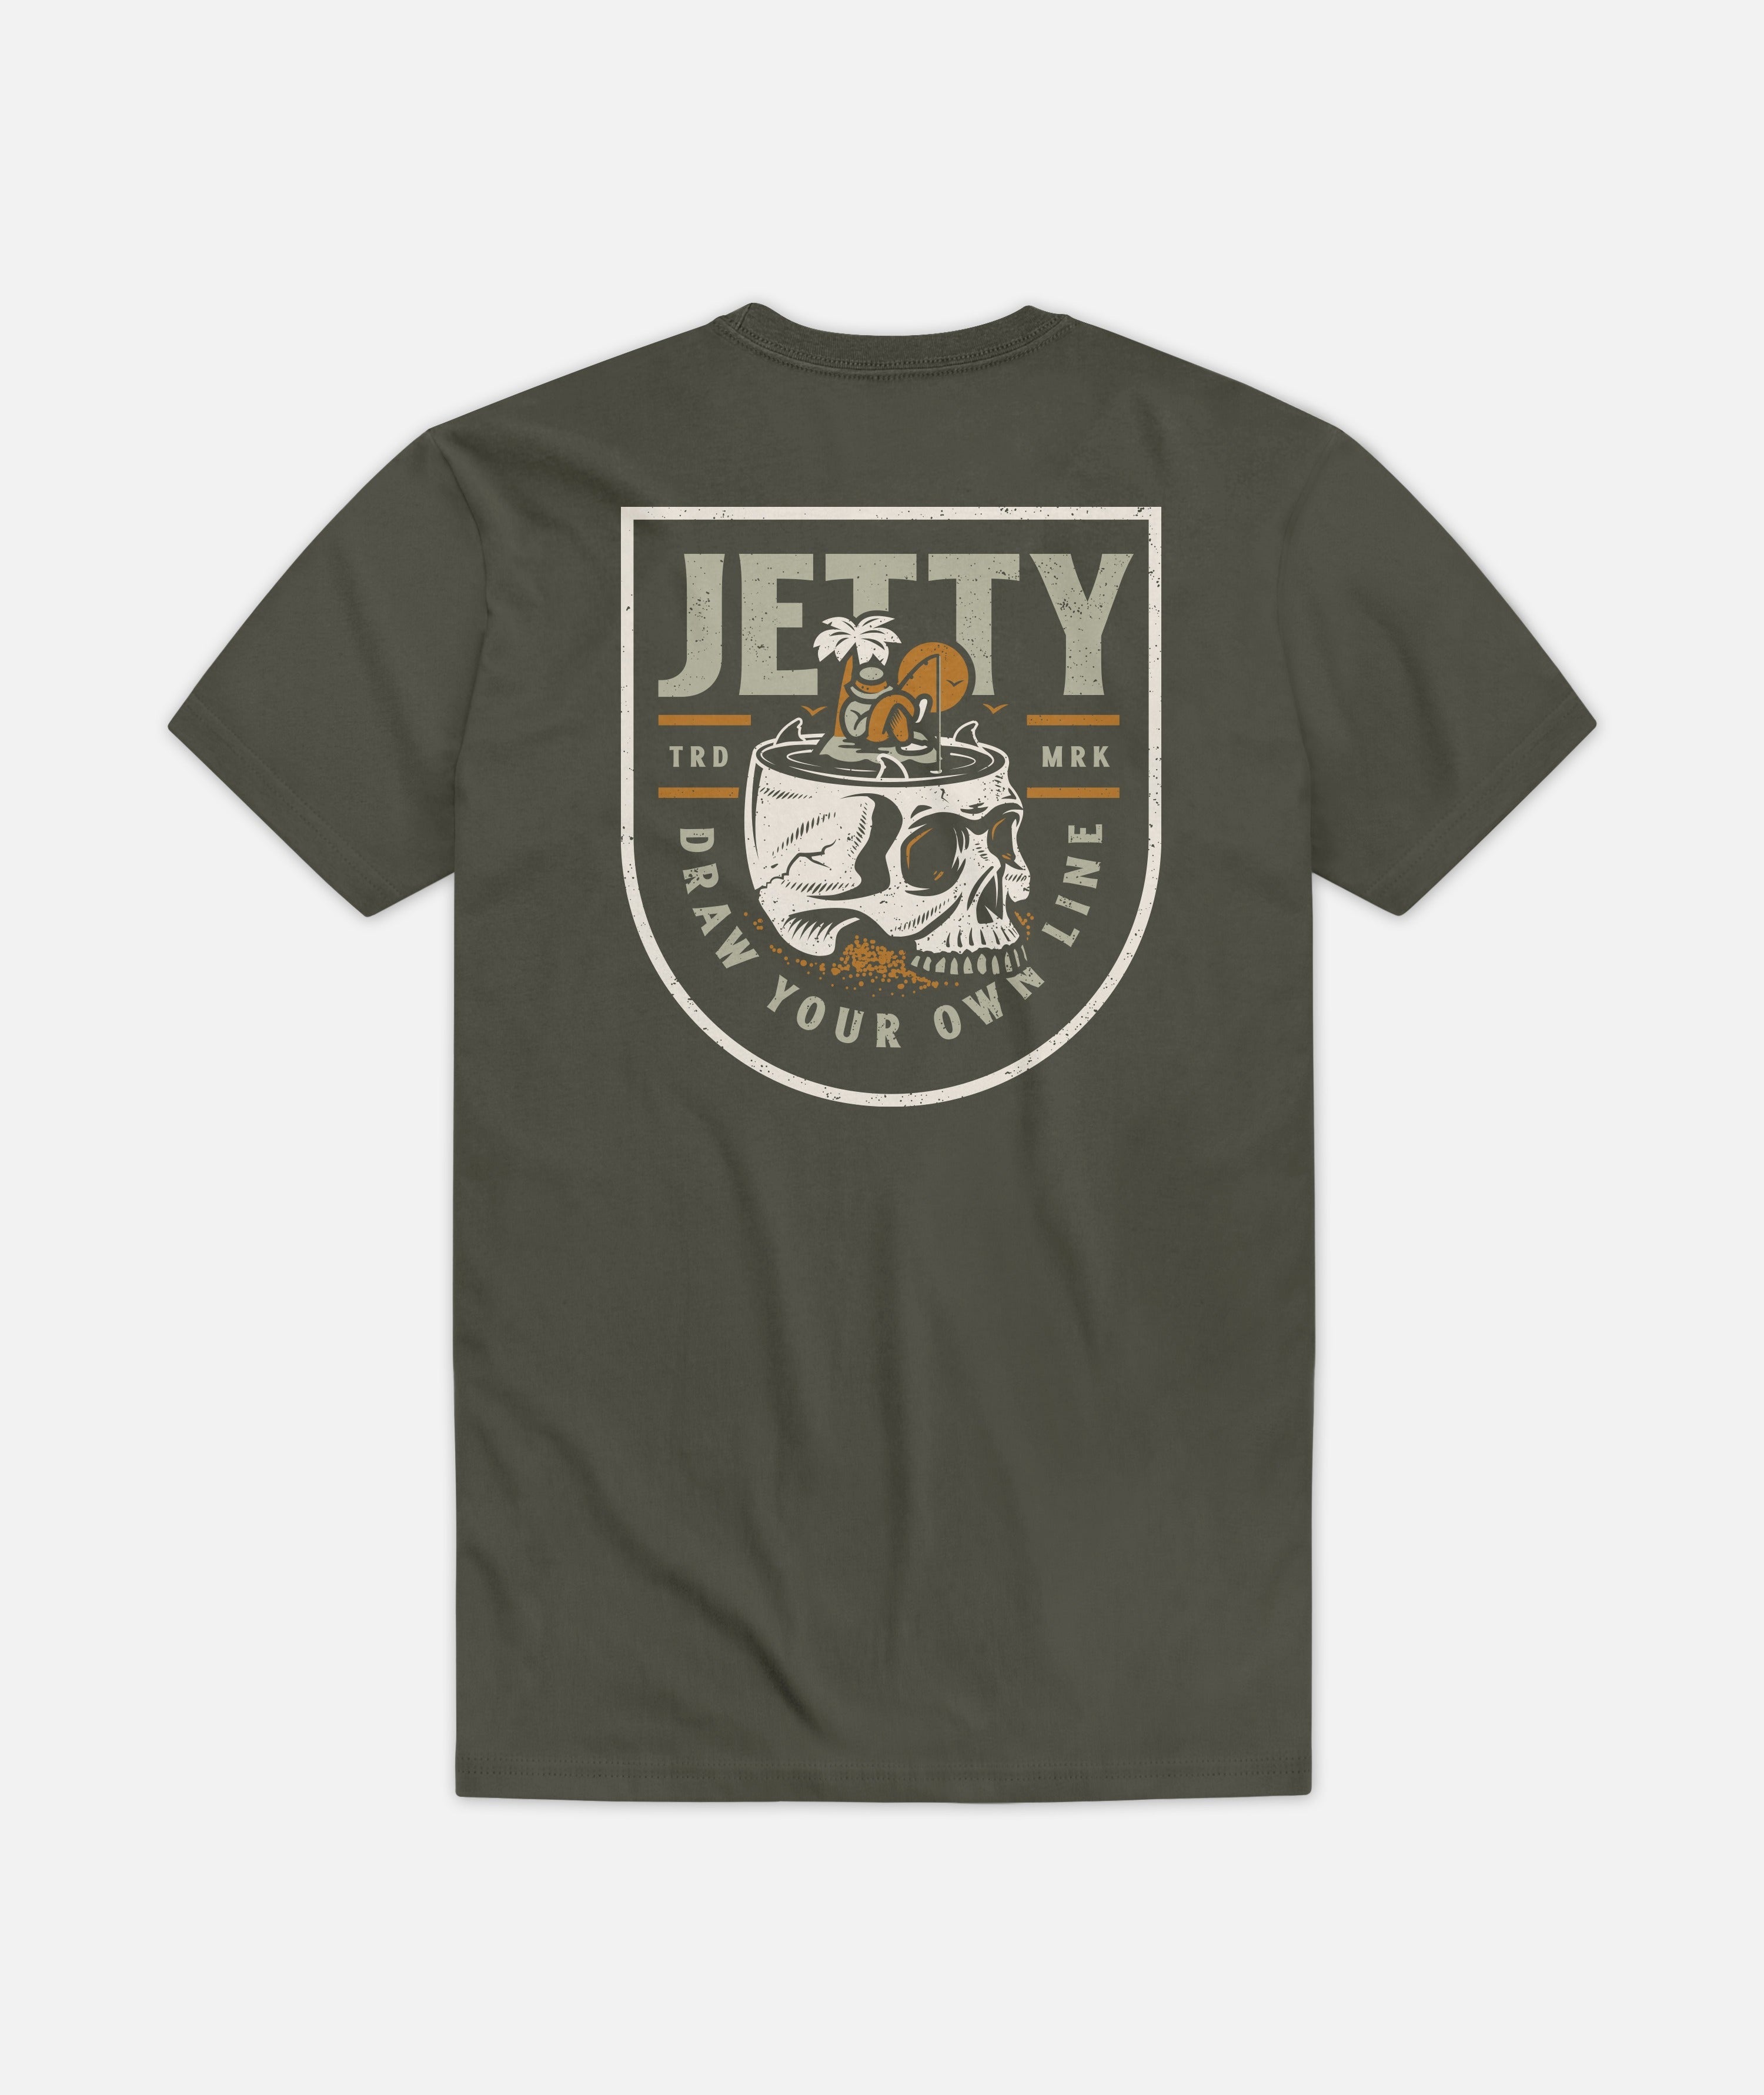 Jetty Stranded T-Shirt - 88 Gear